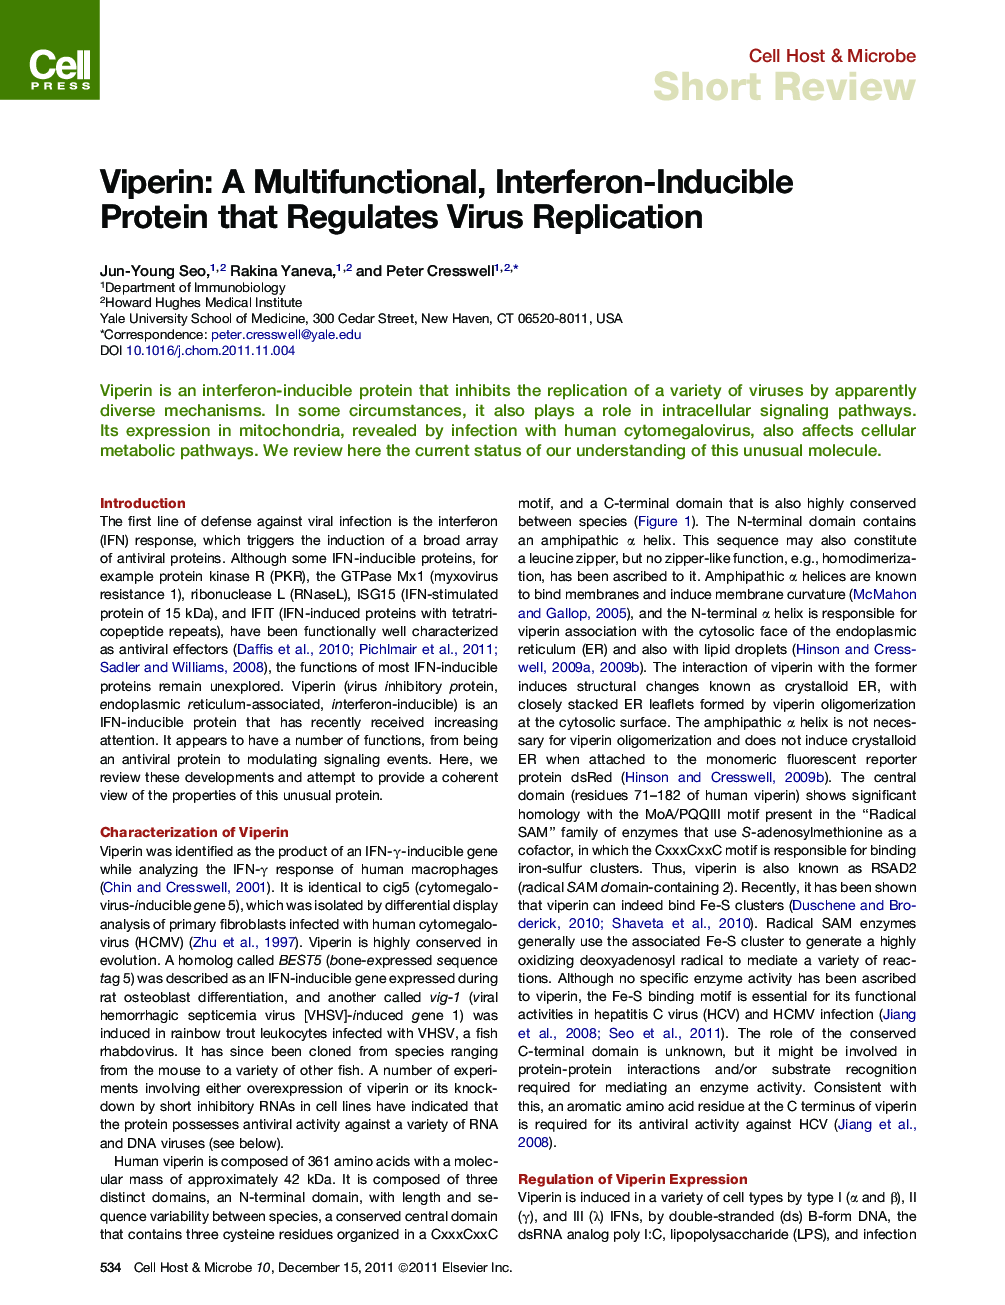 Viperin: A Multifunctional, Interferon-Inducible Protein that Regulates Virus Replication